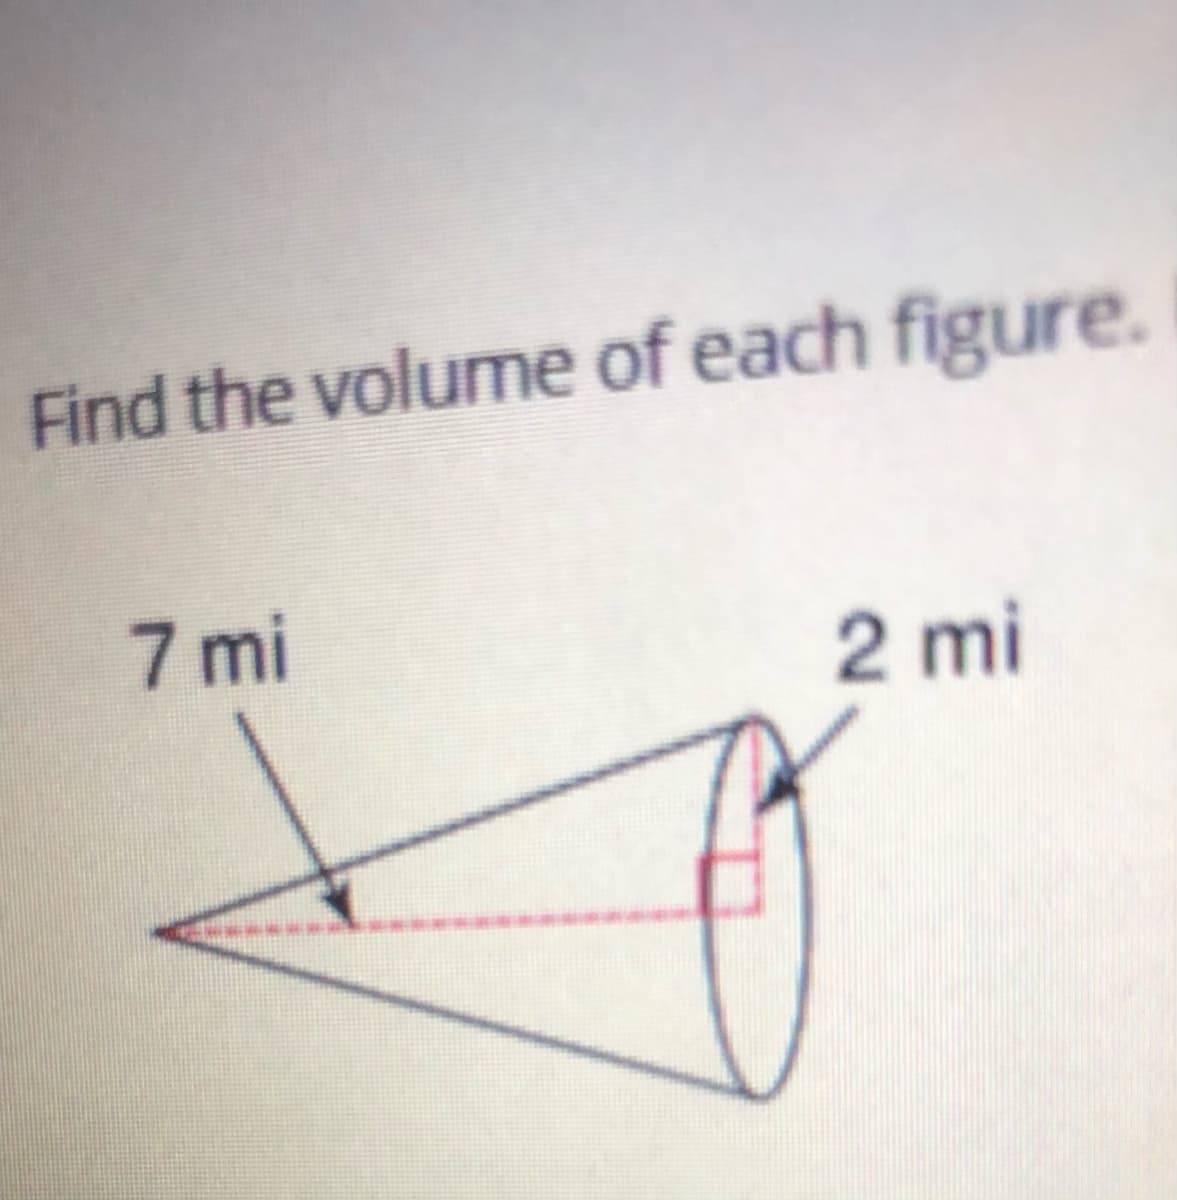 Find the volume of each figure.
7 mi
2 mi
